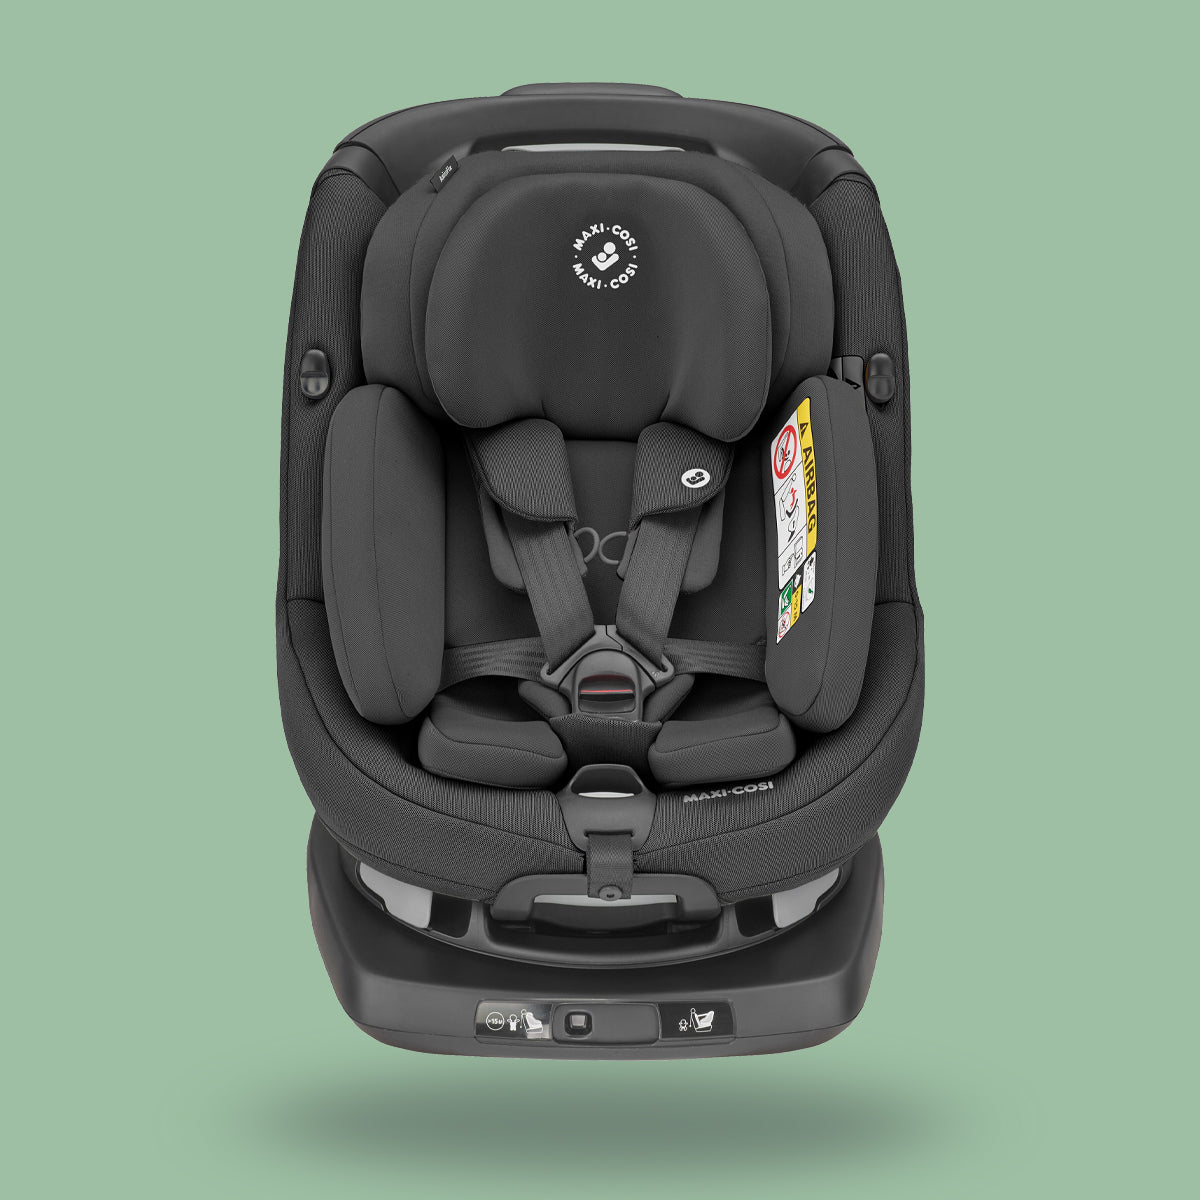 A Maxi-Cosi AxissFix Plus black baby car seat from Maxi-Cosi UAE.